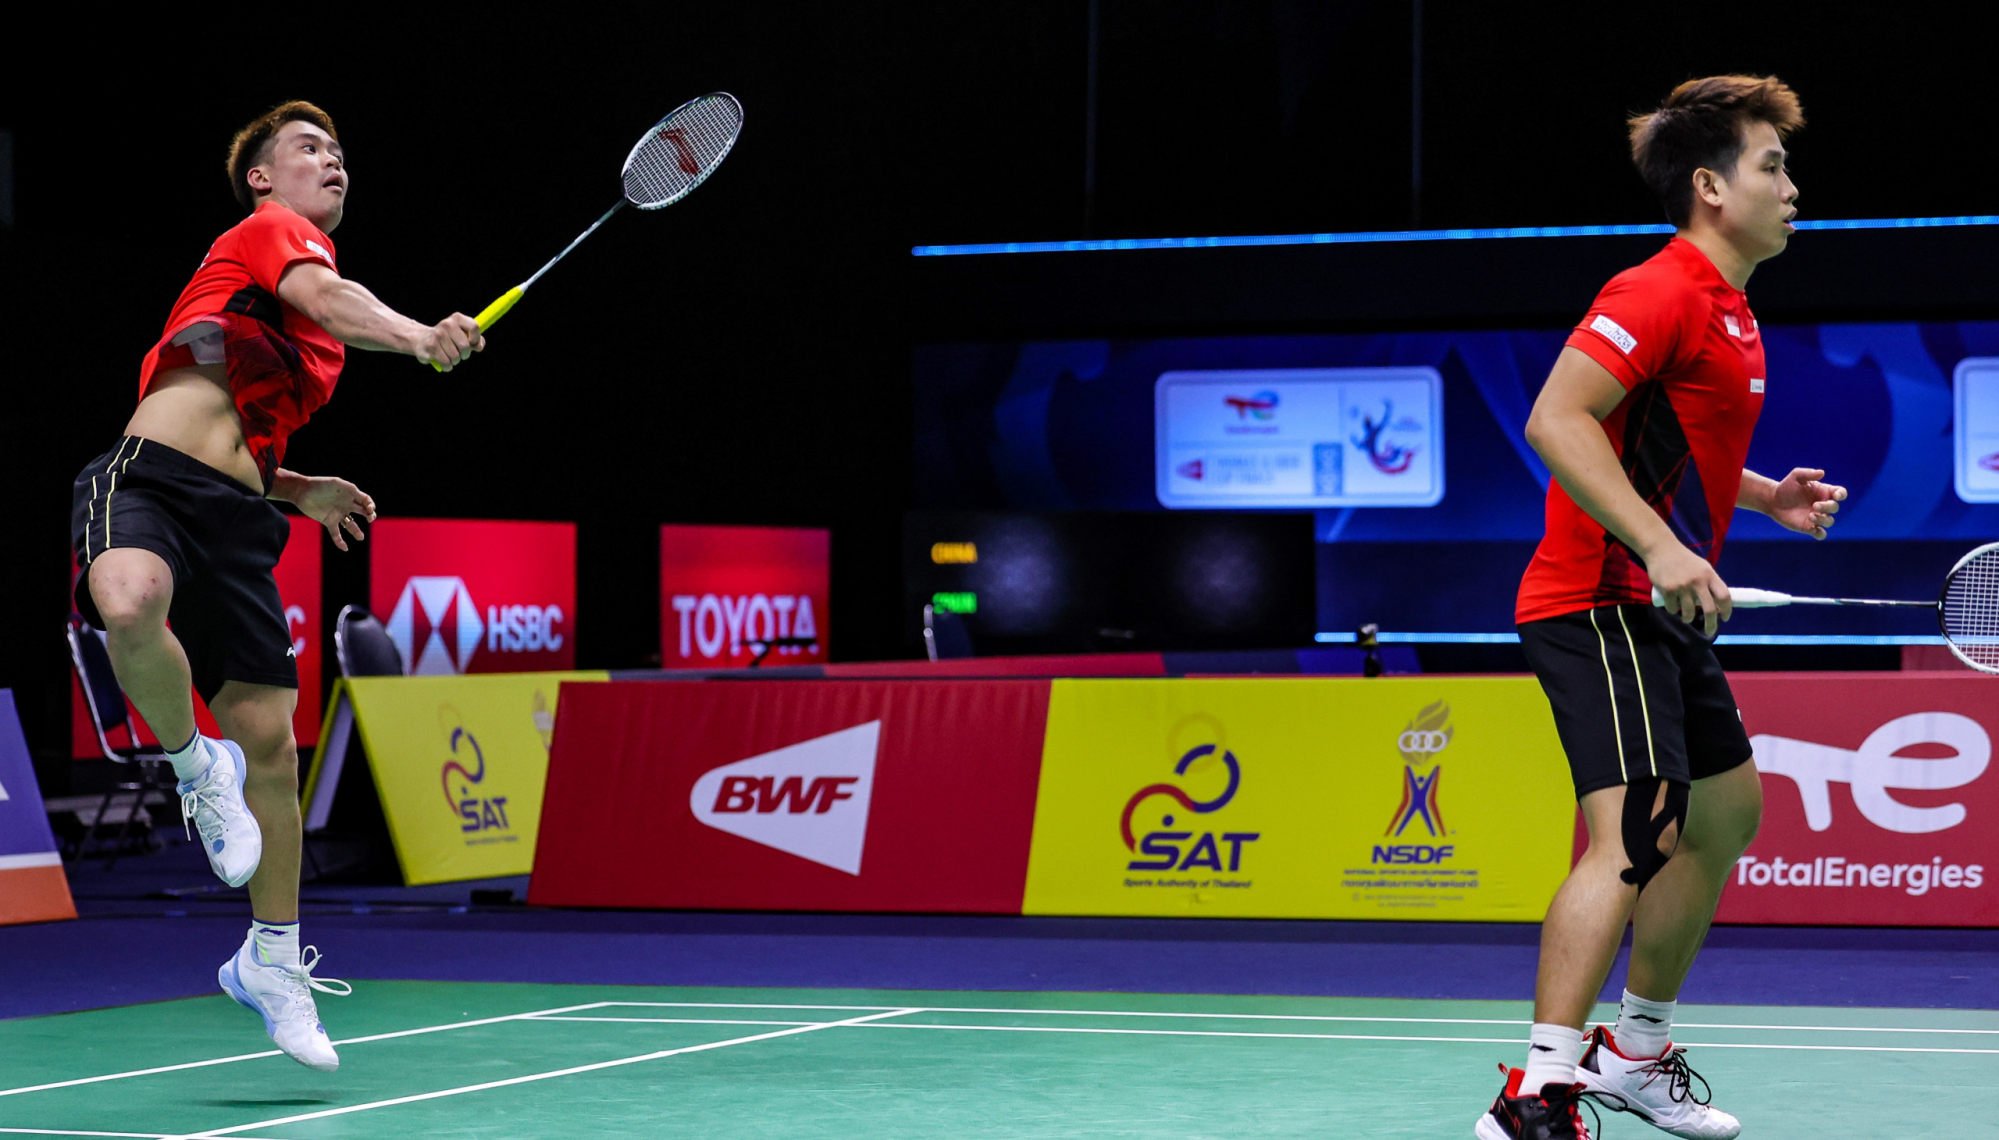 Badminton world champion Loh Kean Yew stunned in SEA Games final, beaten by Thailand star Kunlavut Vitidsarn South China Morning Post